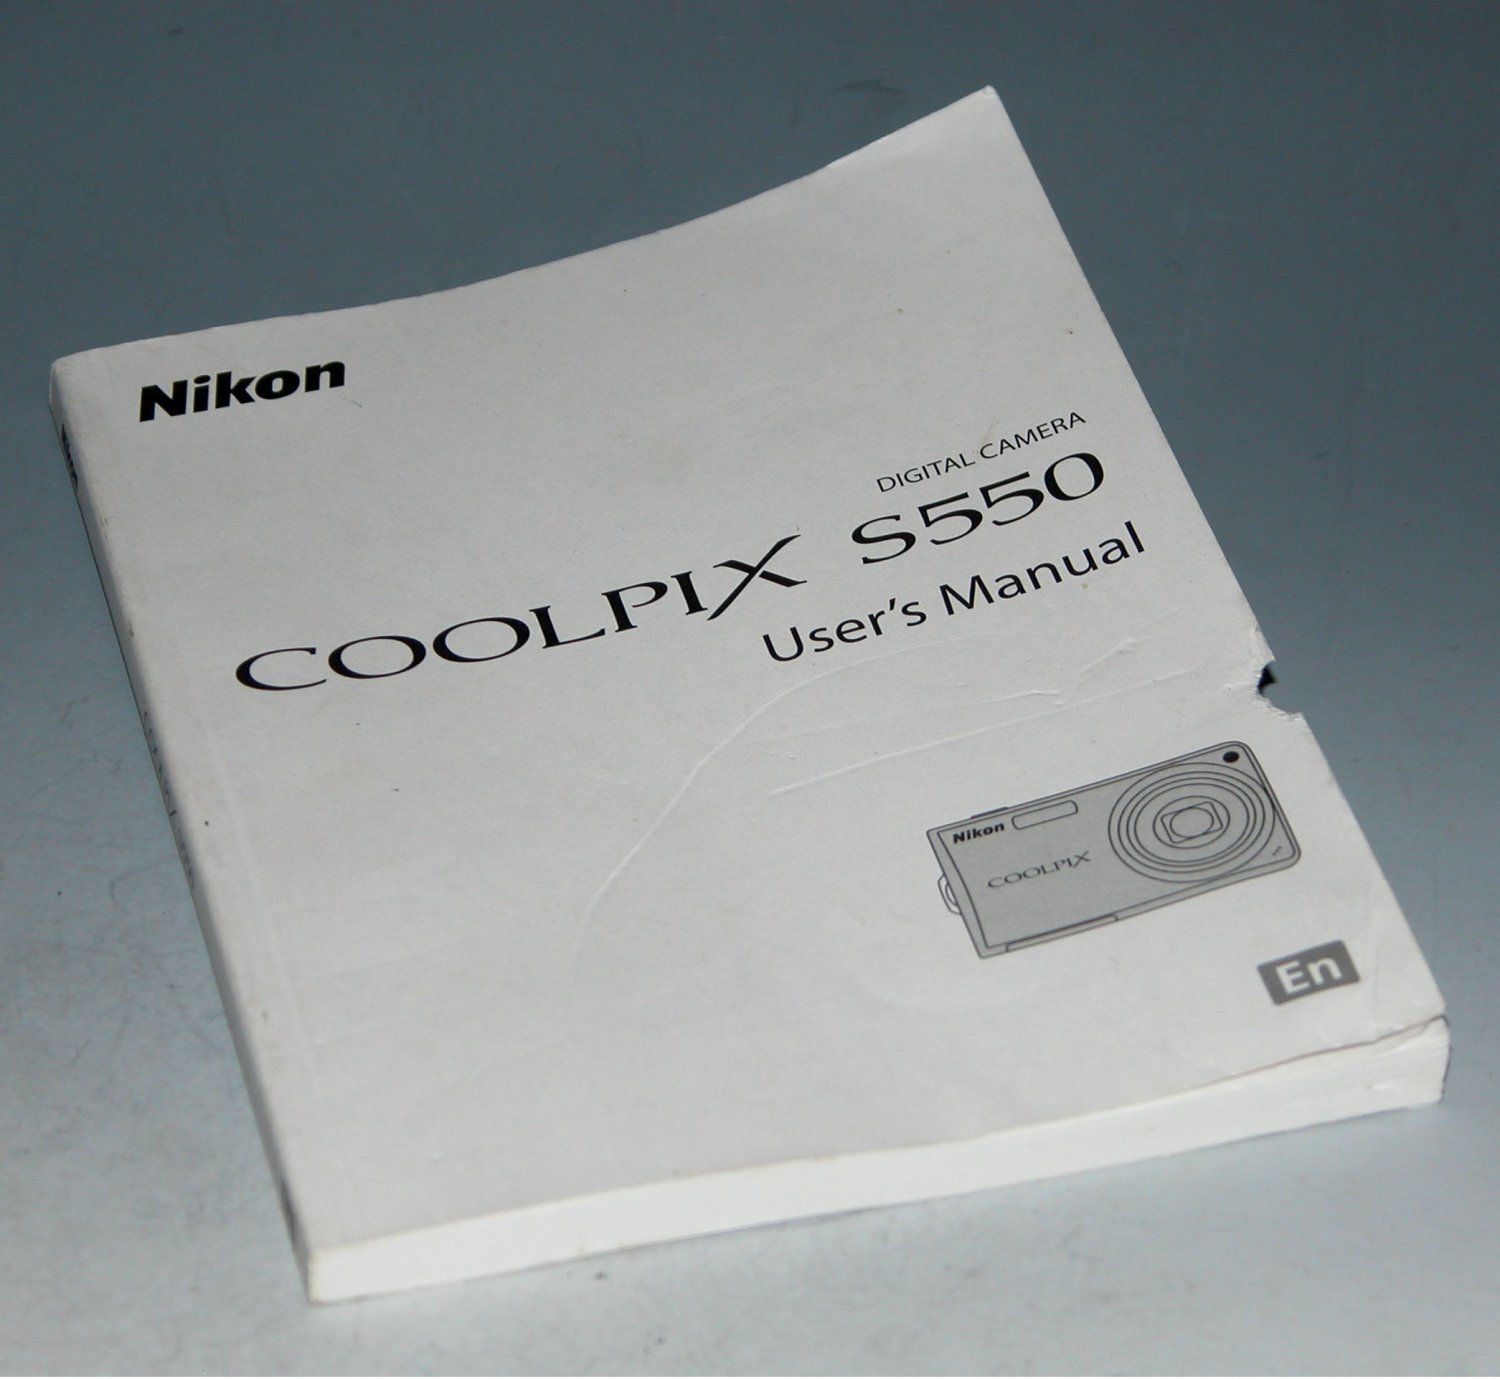 Nikon Coolpix S550 Digital Camera Original User's Manual (English)